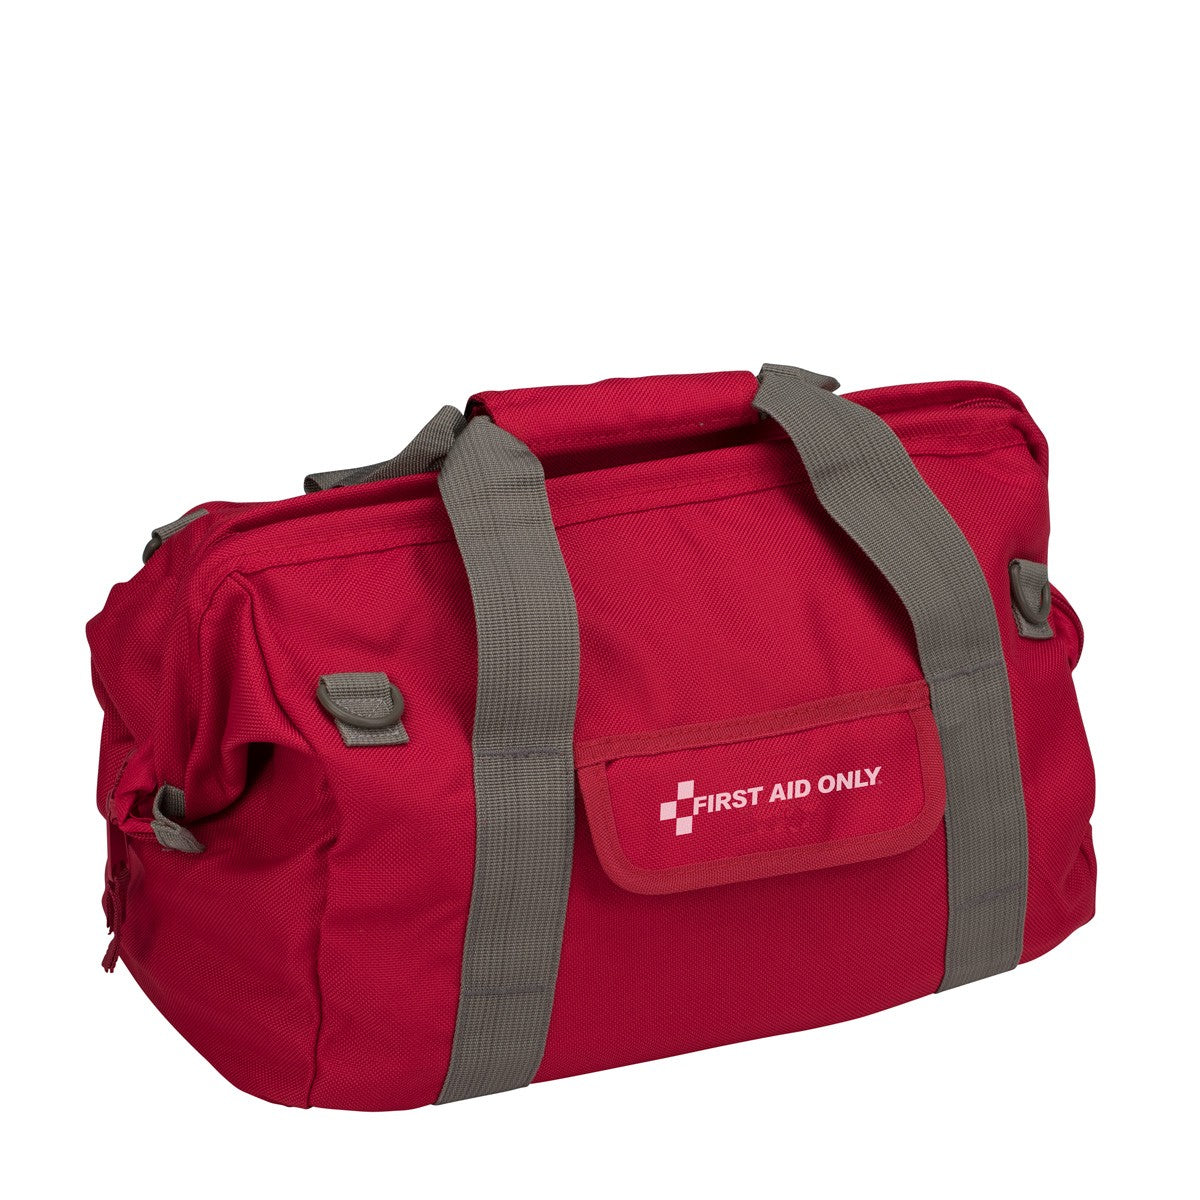 Emergency Preparedness, 24 Person, Large Fabric Bag First Aid Kit - BS-FAK-90489-1-FM